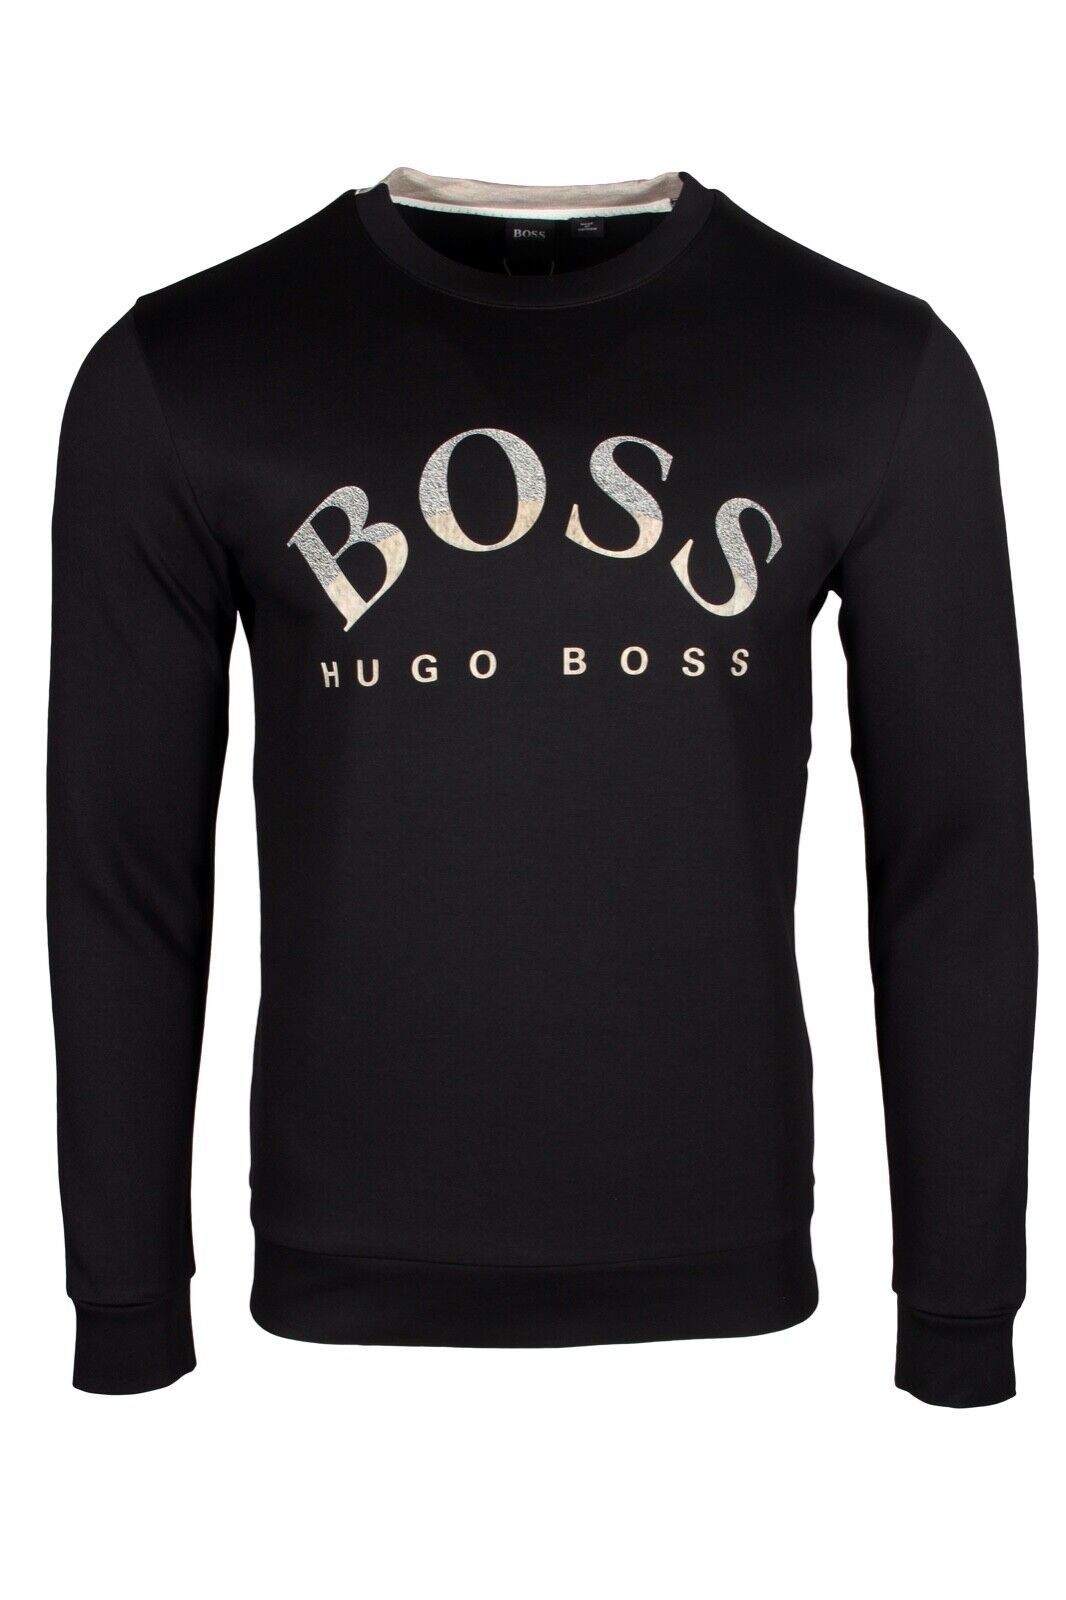 samenvoegen spion Stier Hugo BOSS Salbo 1 Men's Slim Fit Sweatshirt in Black 50457020 001 | eBay